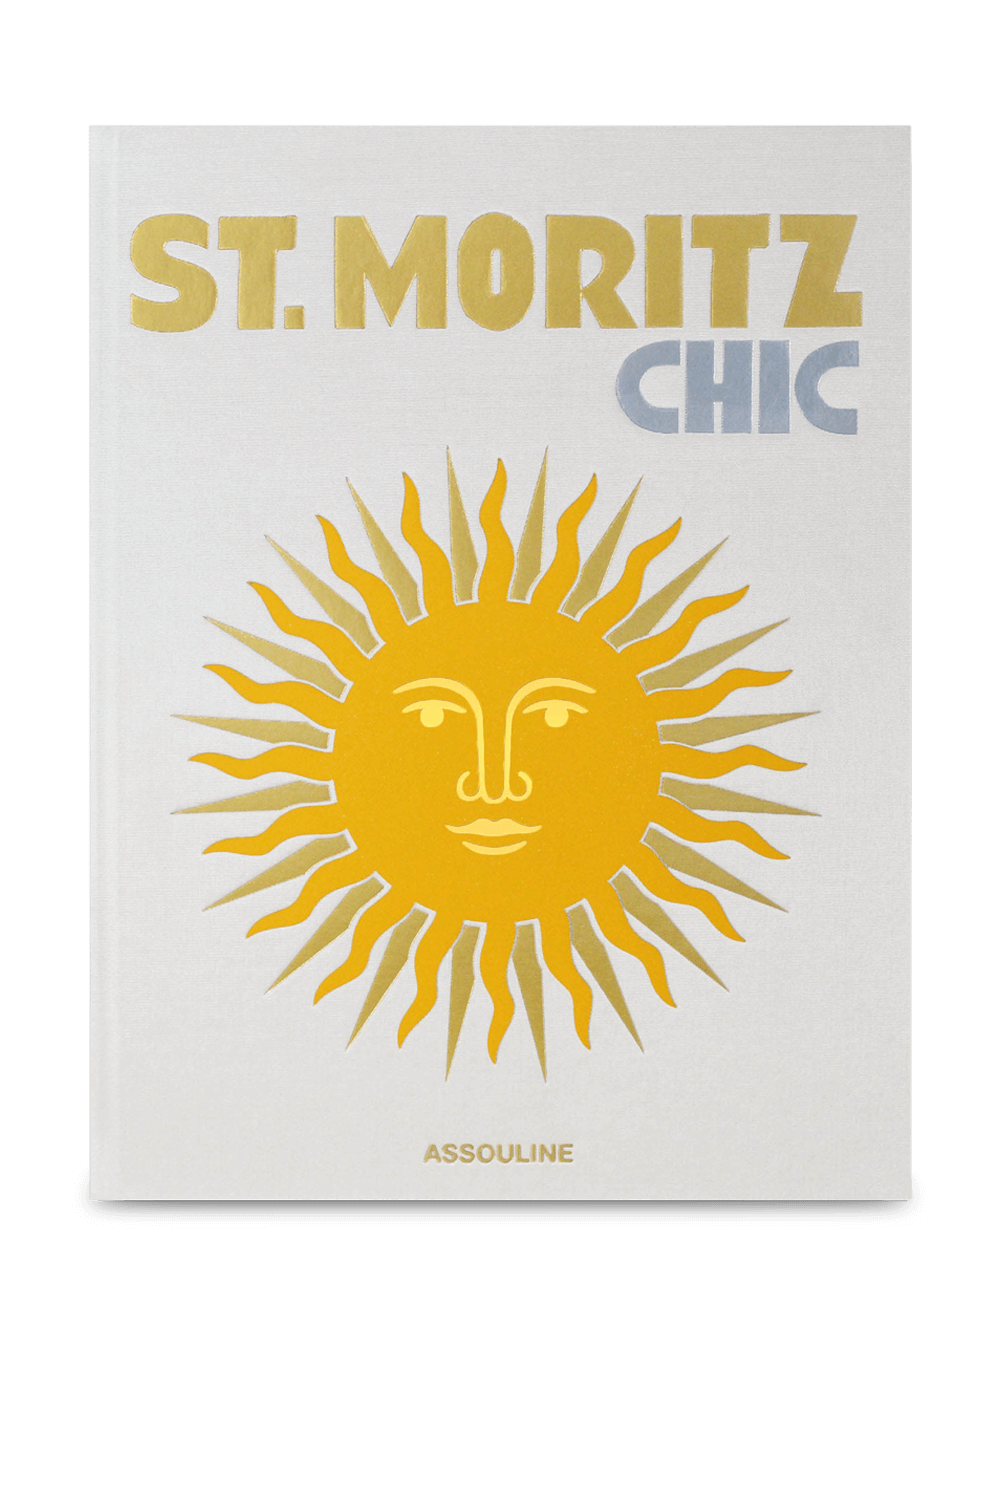 St. Moritz Chic ASSOULINE